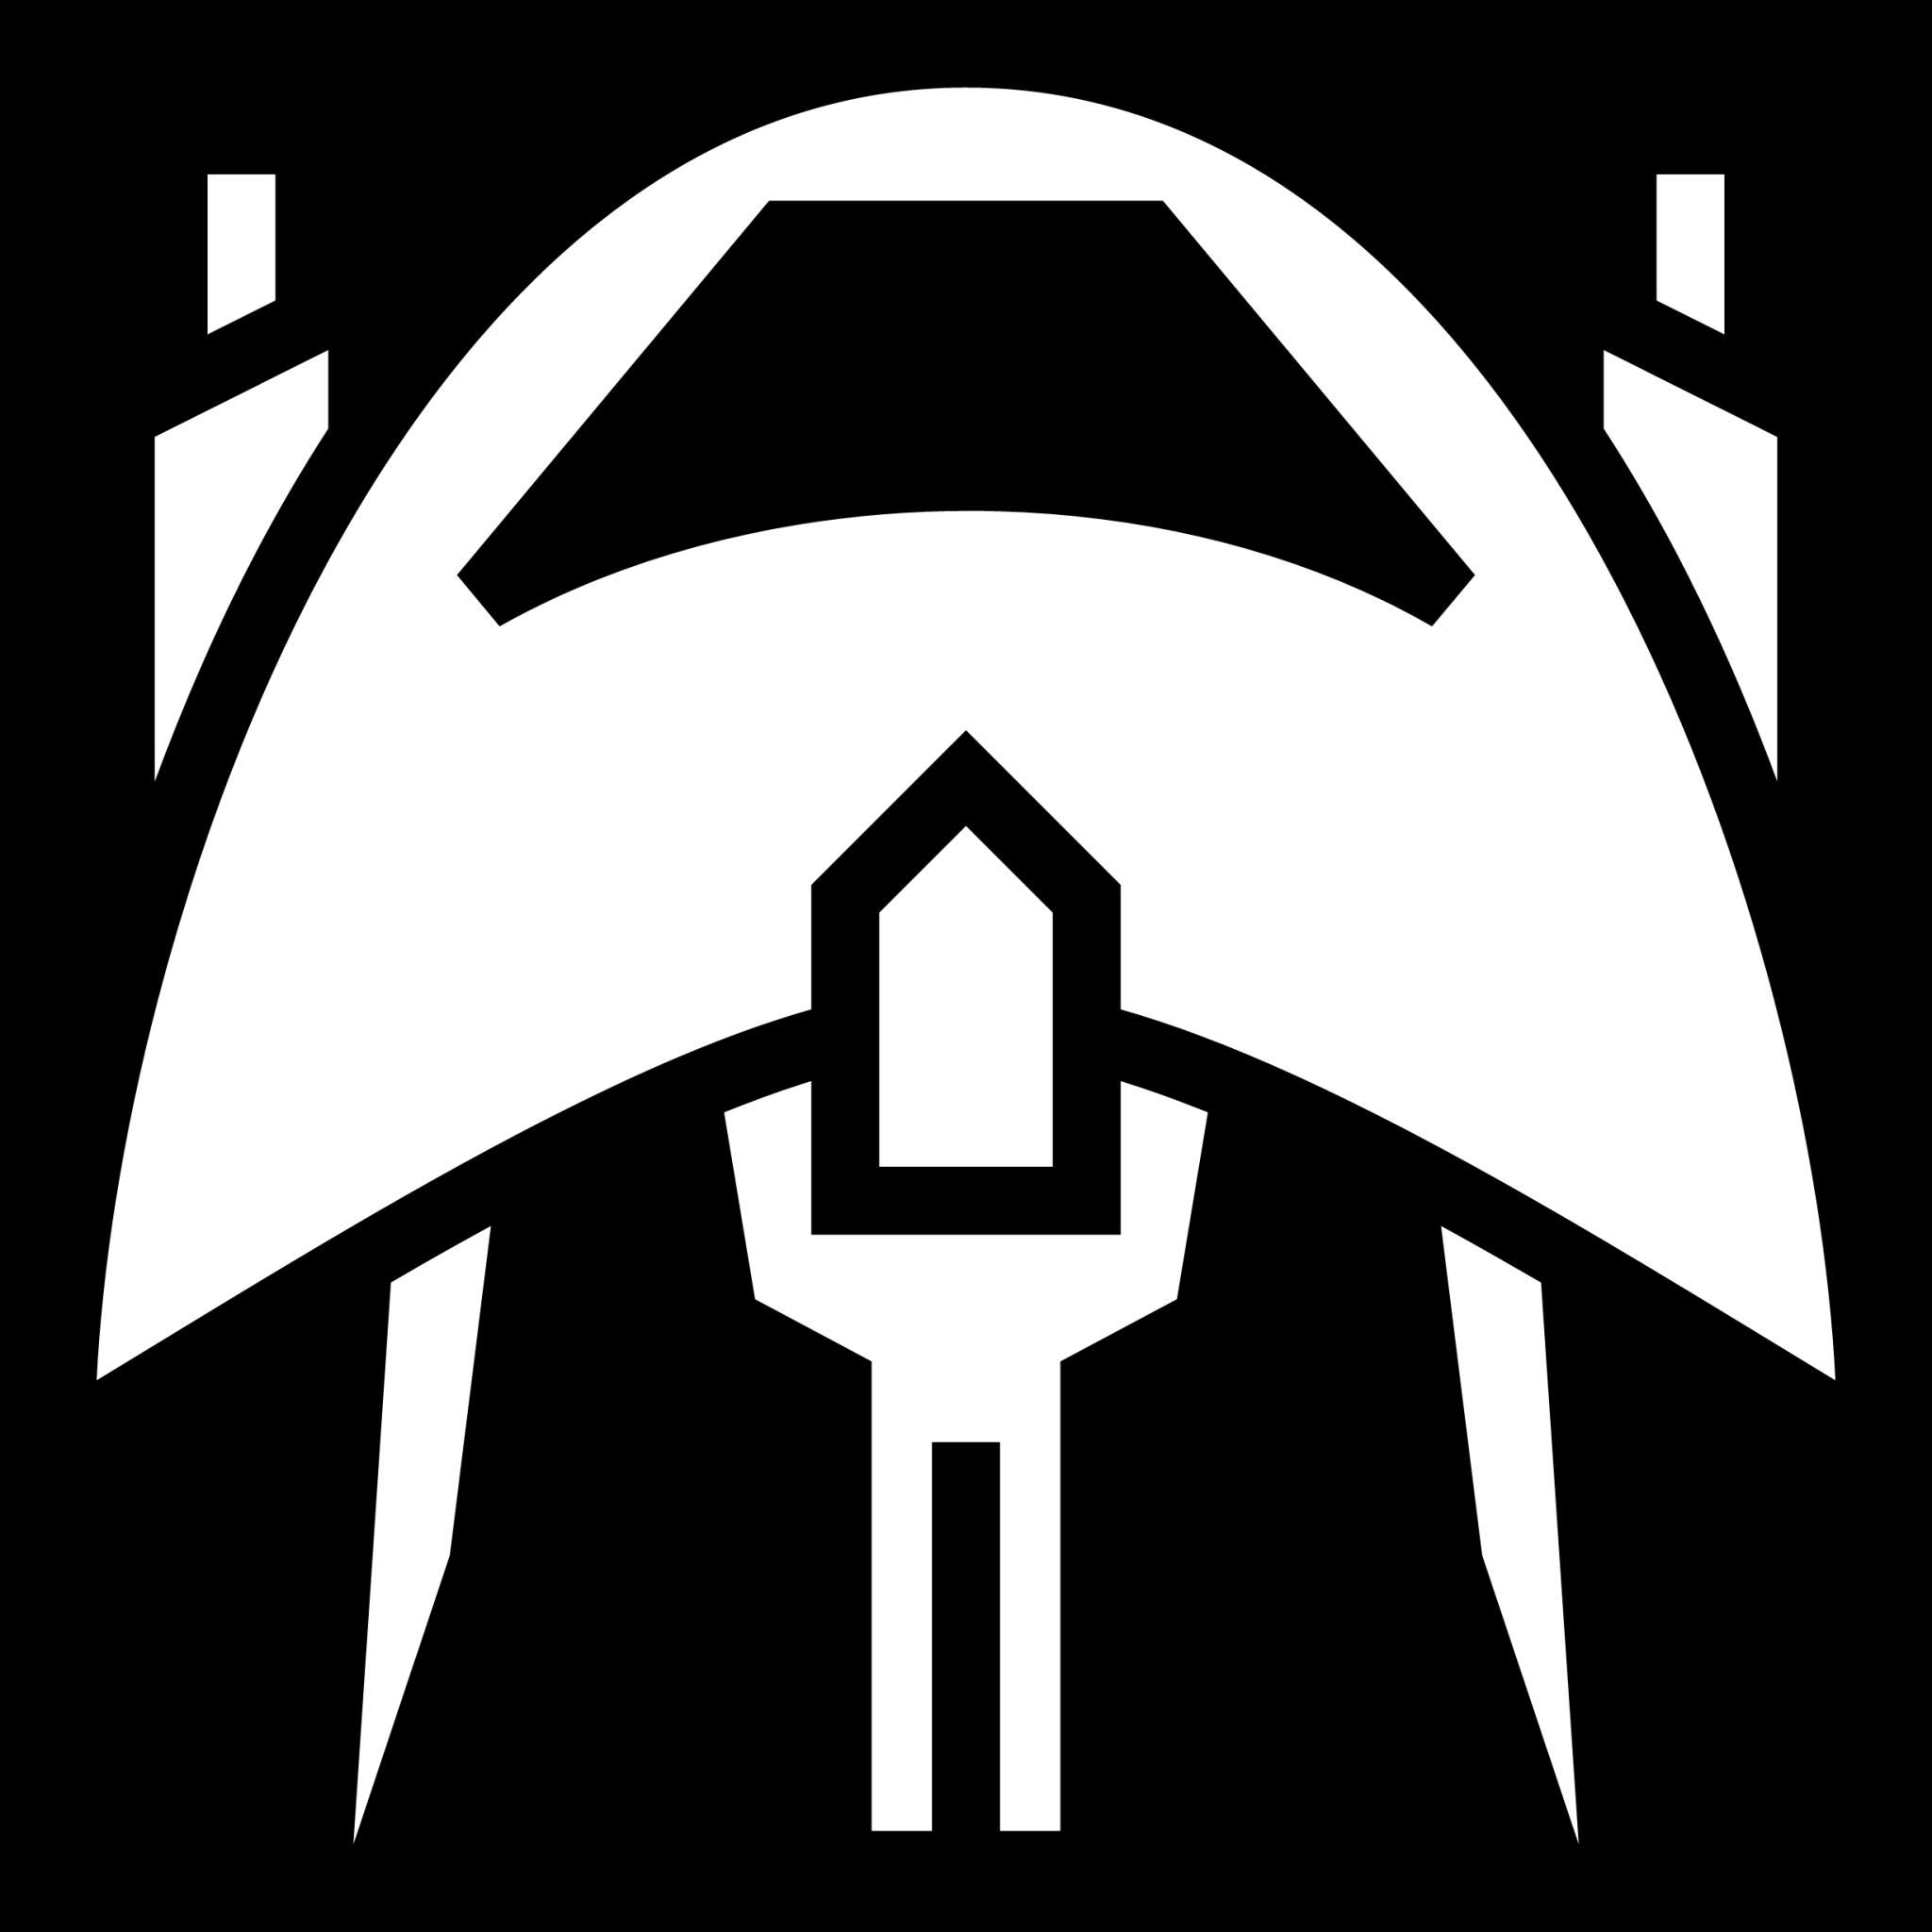 interceptor ship icon